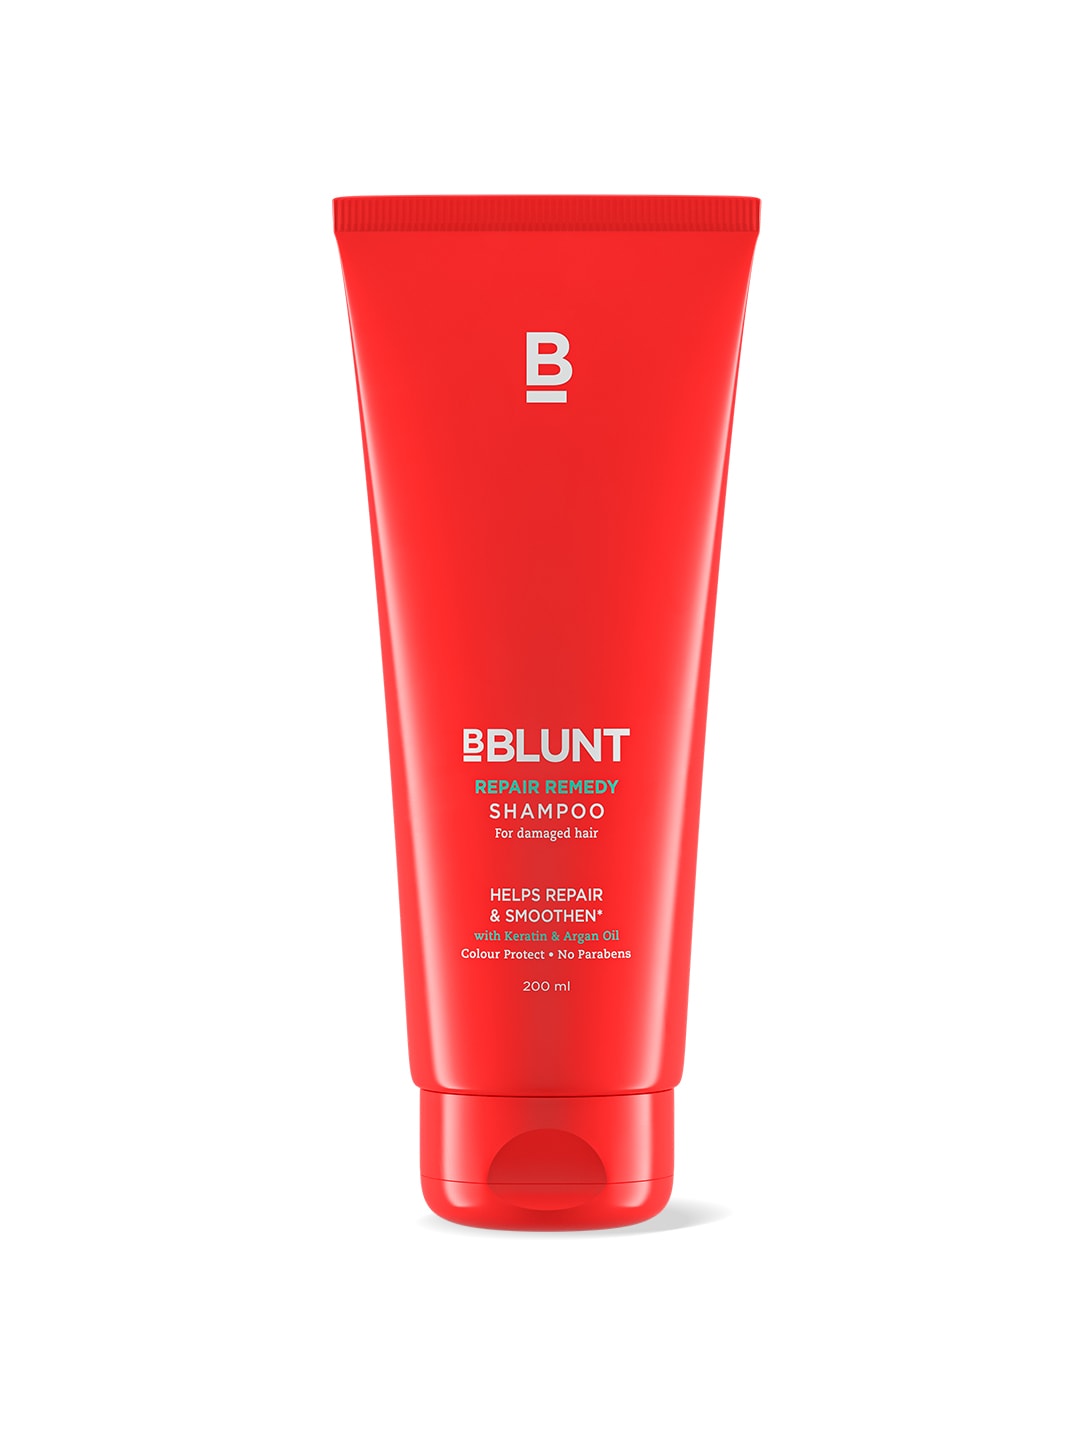 BBLUNT Women Repair Remedy Shampoo 200 ml Price in India